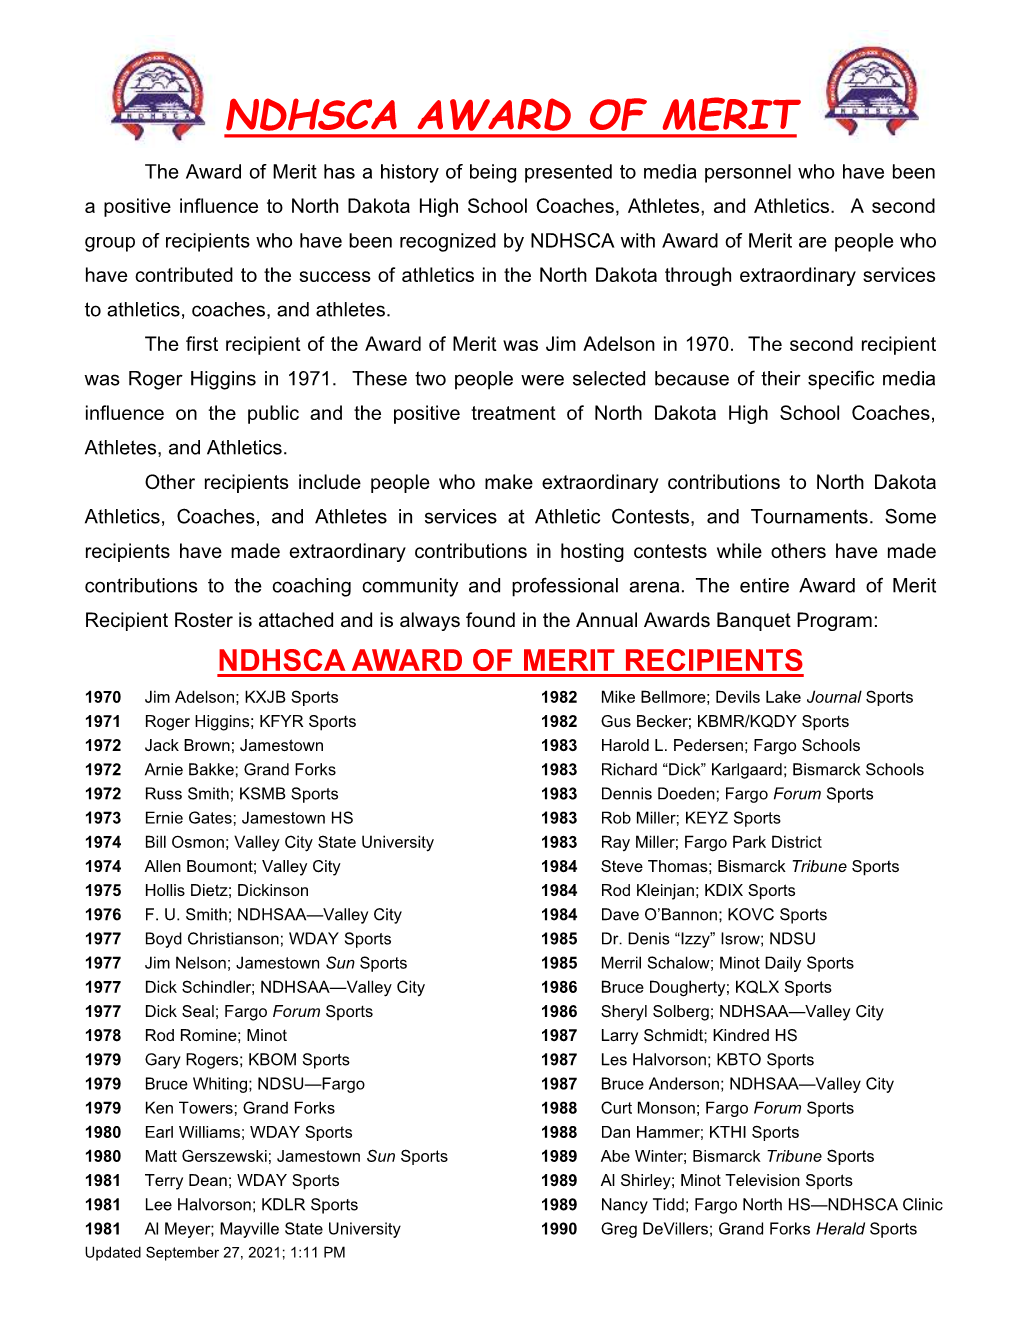 NDHSCA Award of Merit Recipients